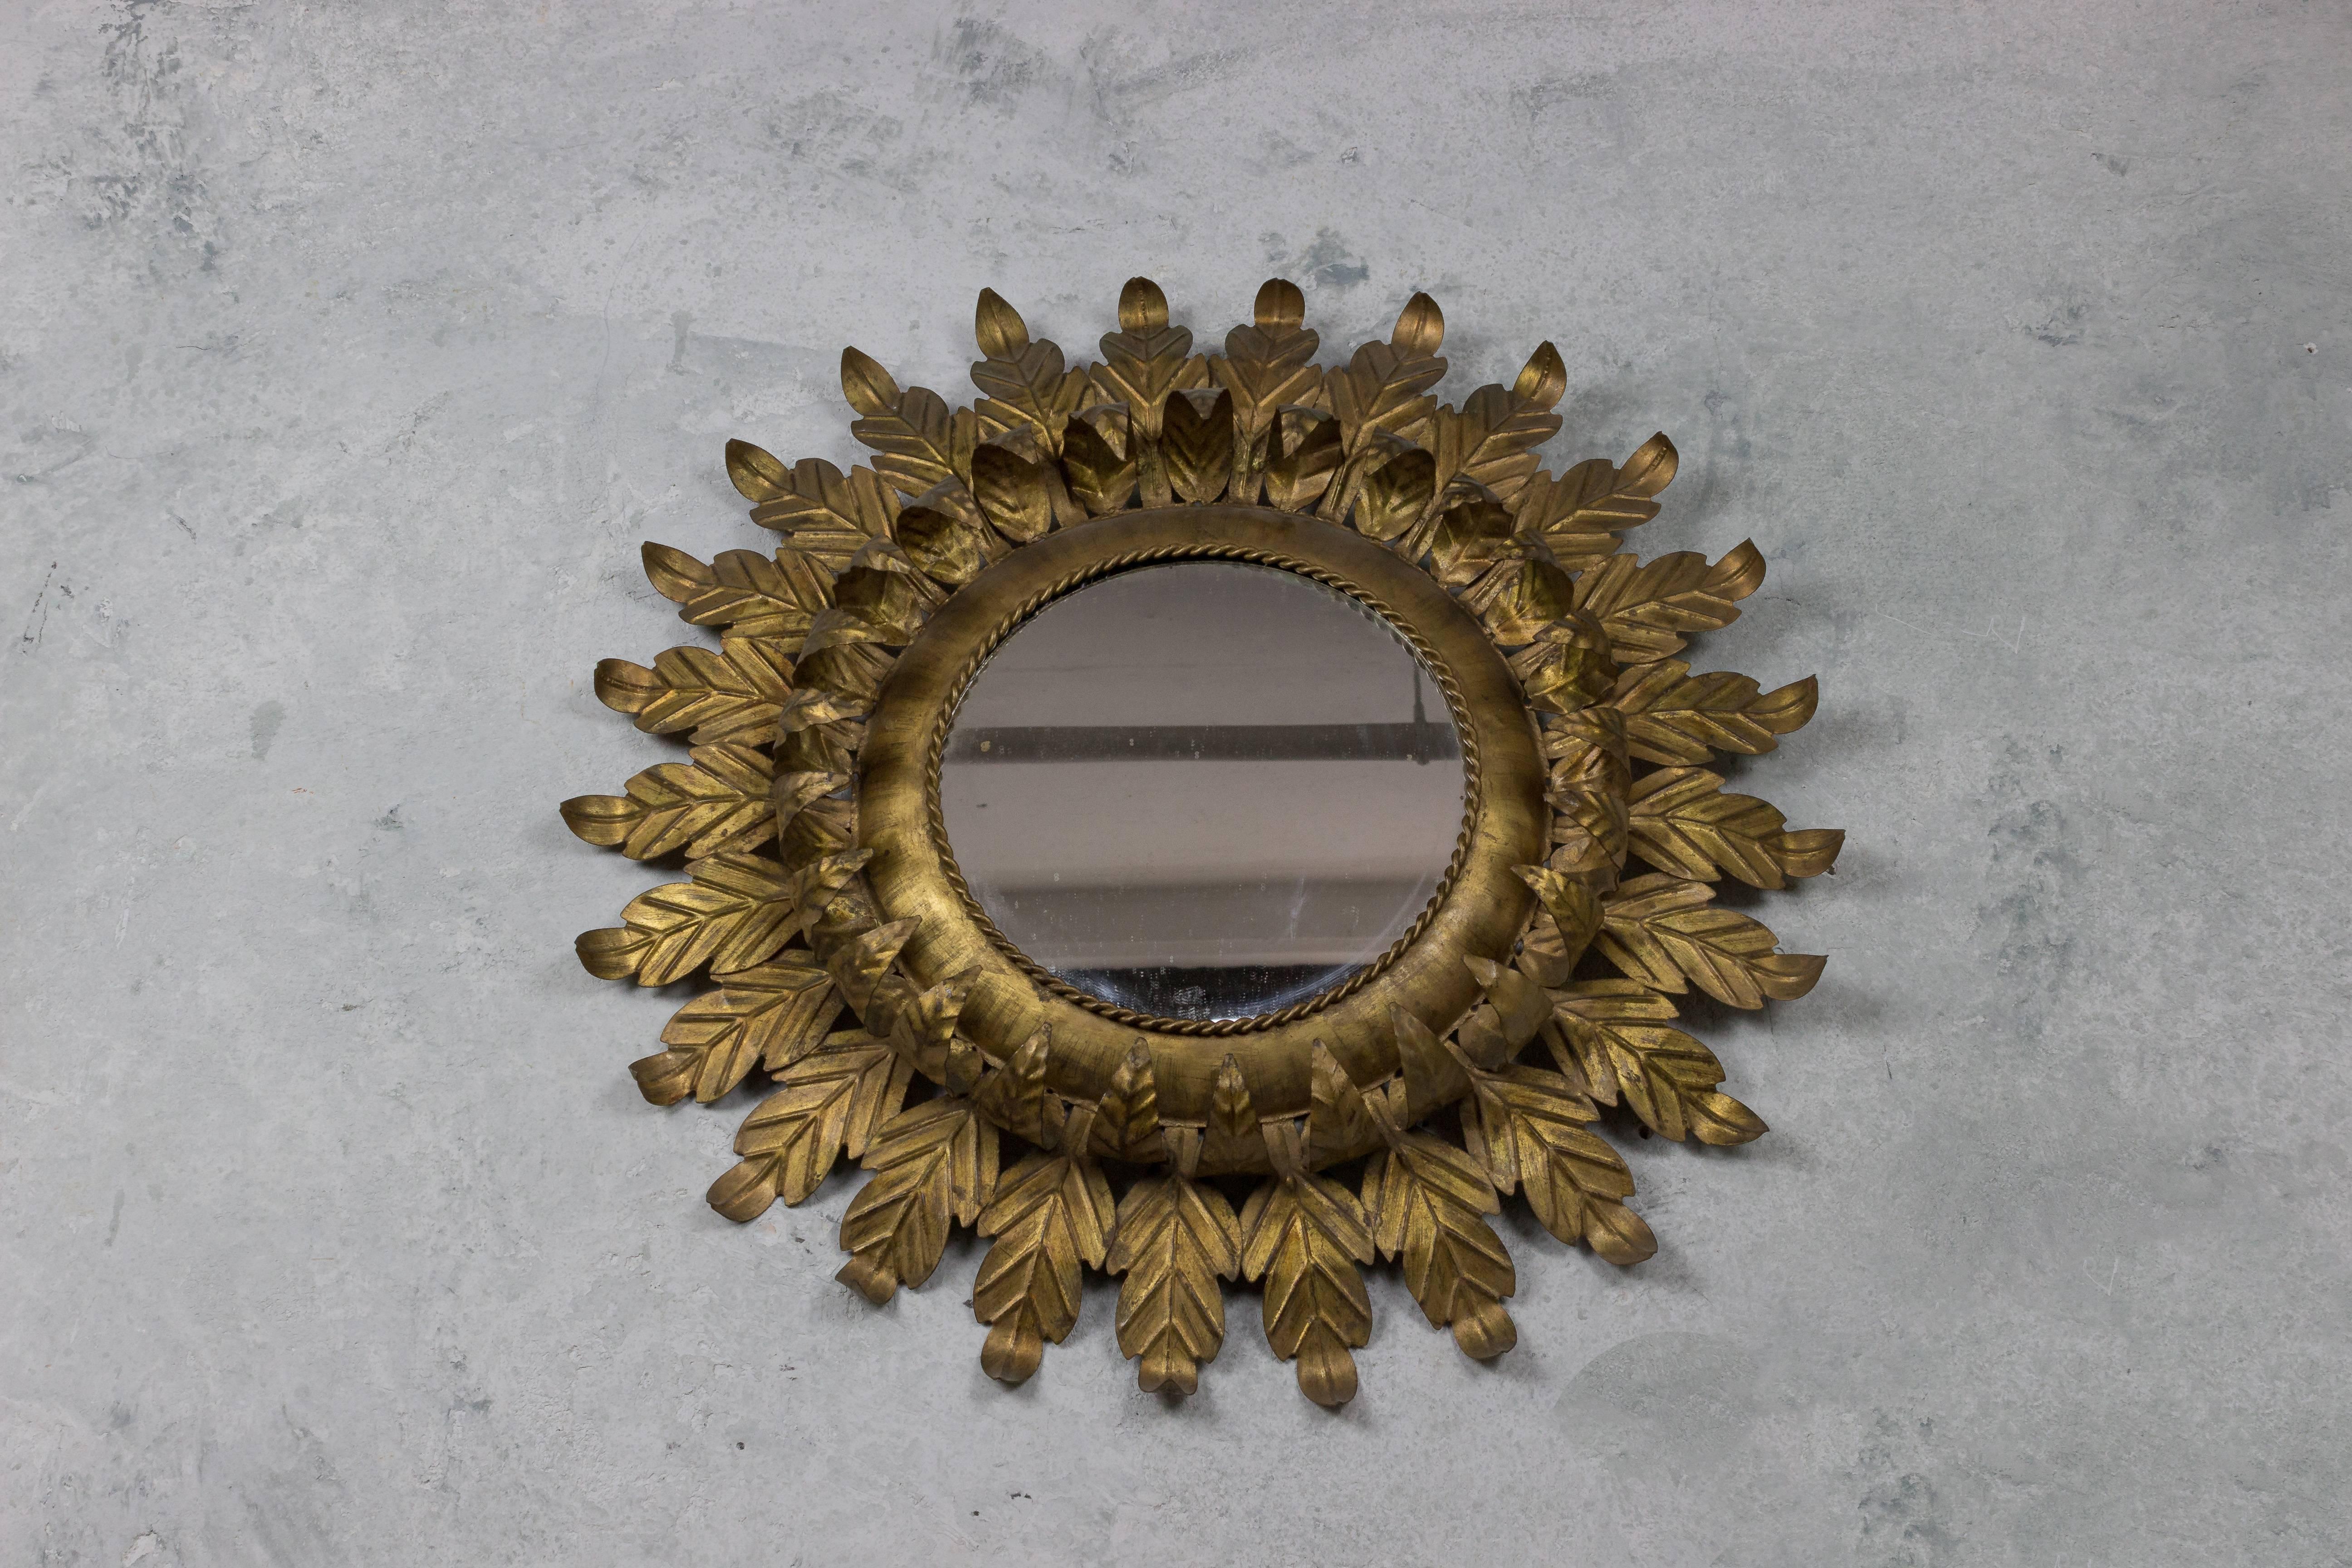 Elegant round sunburst mirror with delicate double leaf motif.